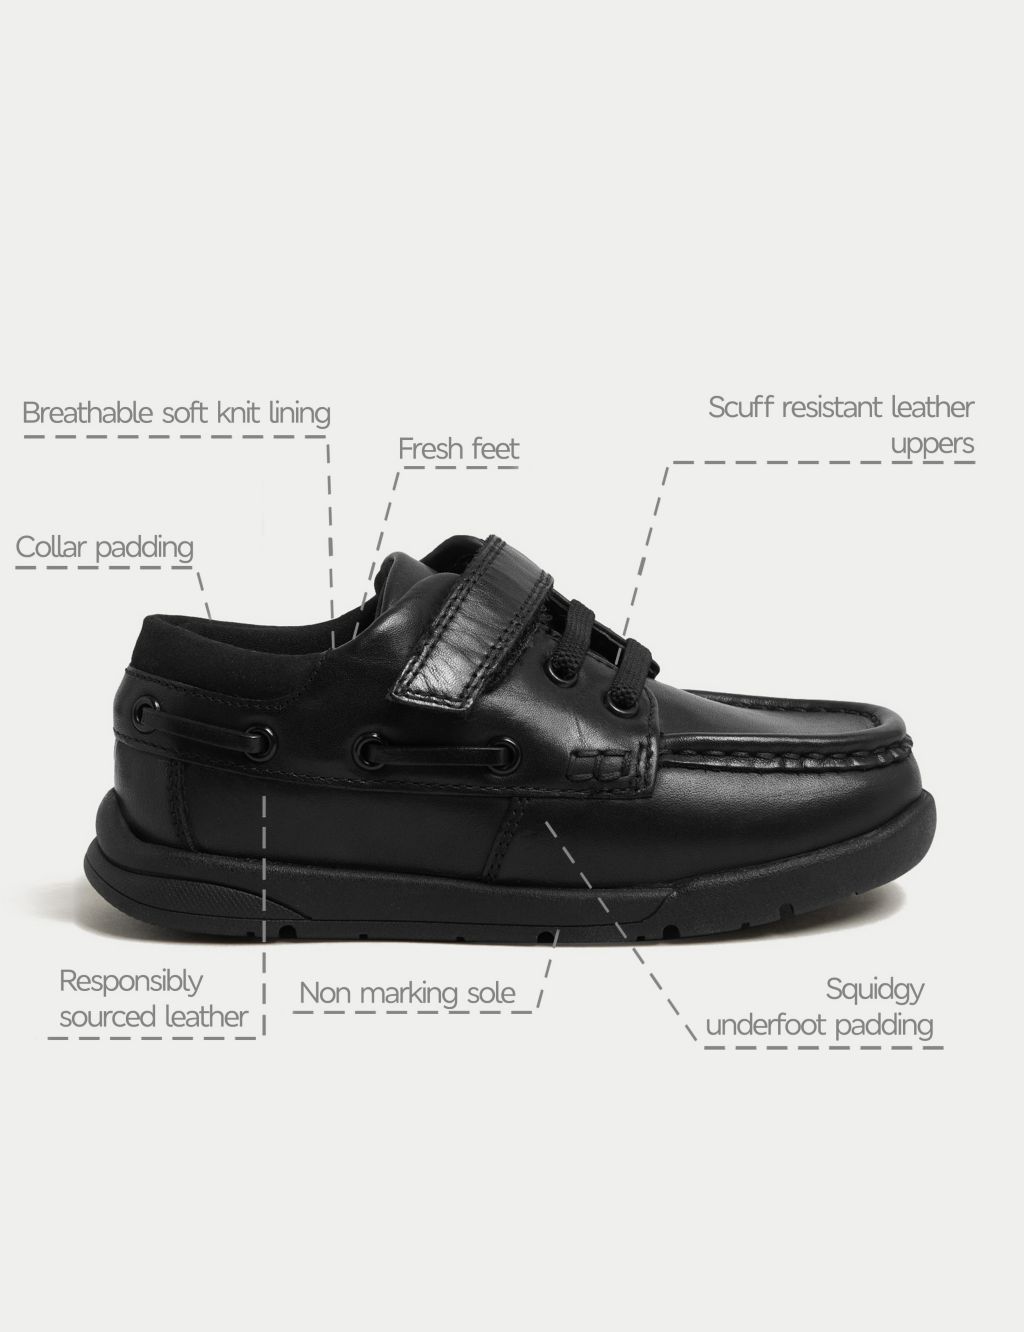 Kids' Leather Freshfeet™ Riptape School Shoes (8 Small - 2 Large) image 5